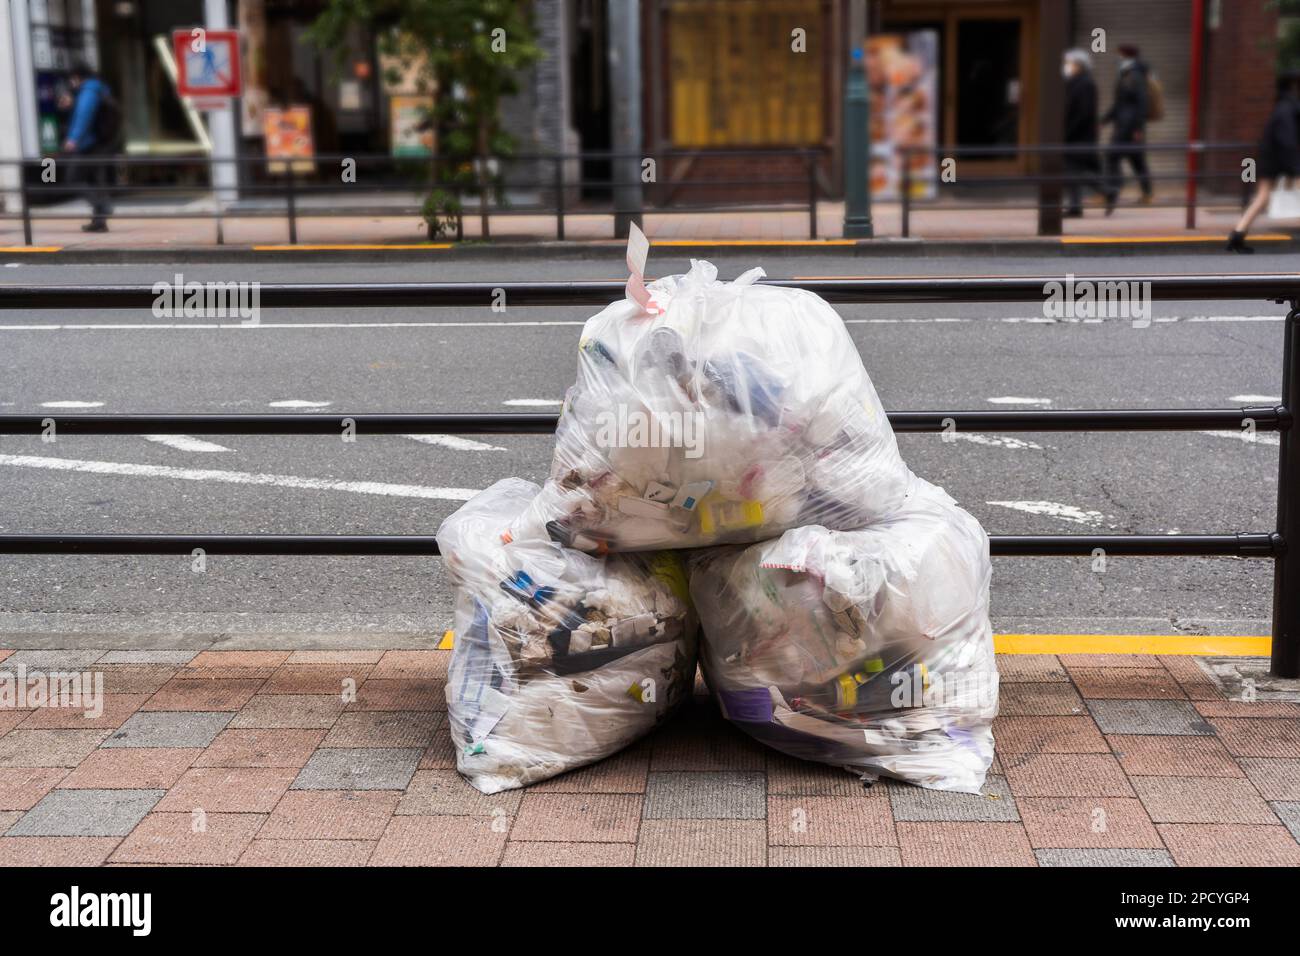 https://c8.alamy.com/comp/2PCYGP4/a-pile-of-trash-bag-on-a-footpath-in-tokyo-japan-2PCYGP4.jpg